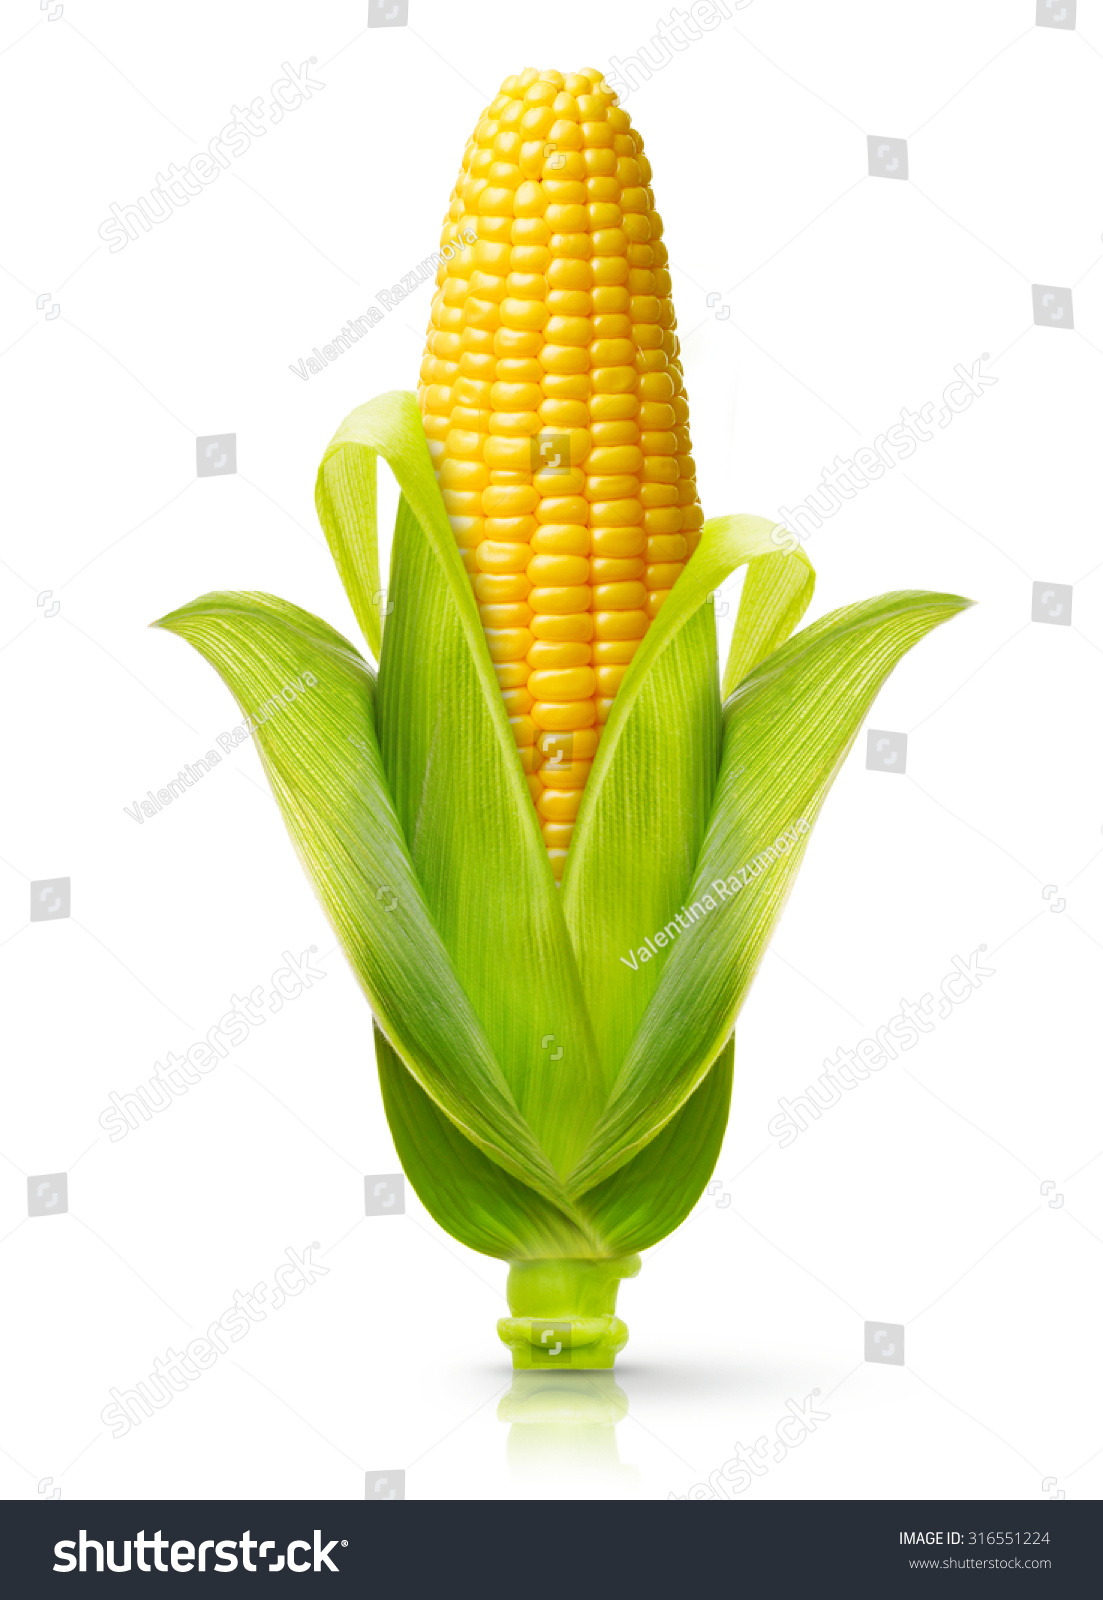 Ear of corn isolated on a white background. Fresh corncob. #316551224